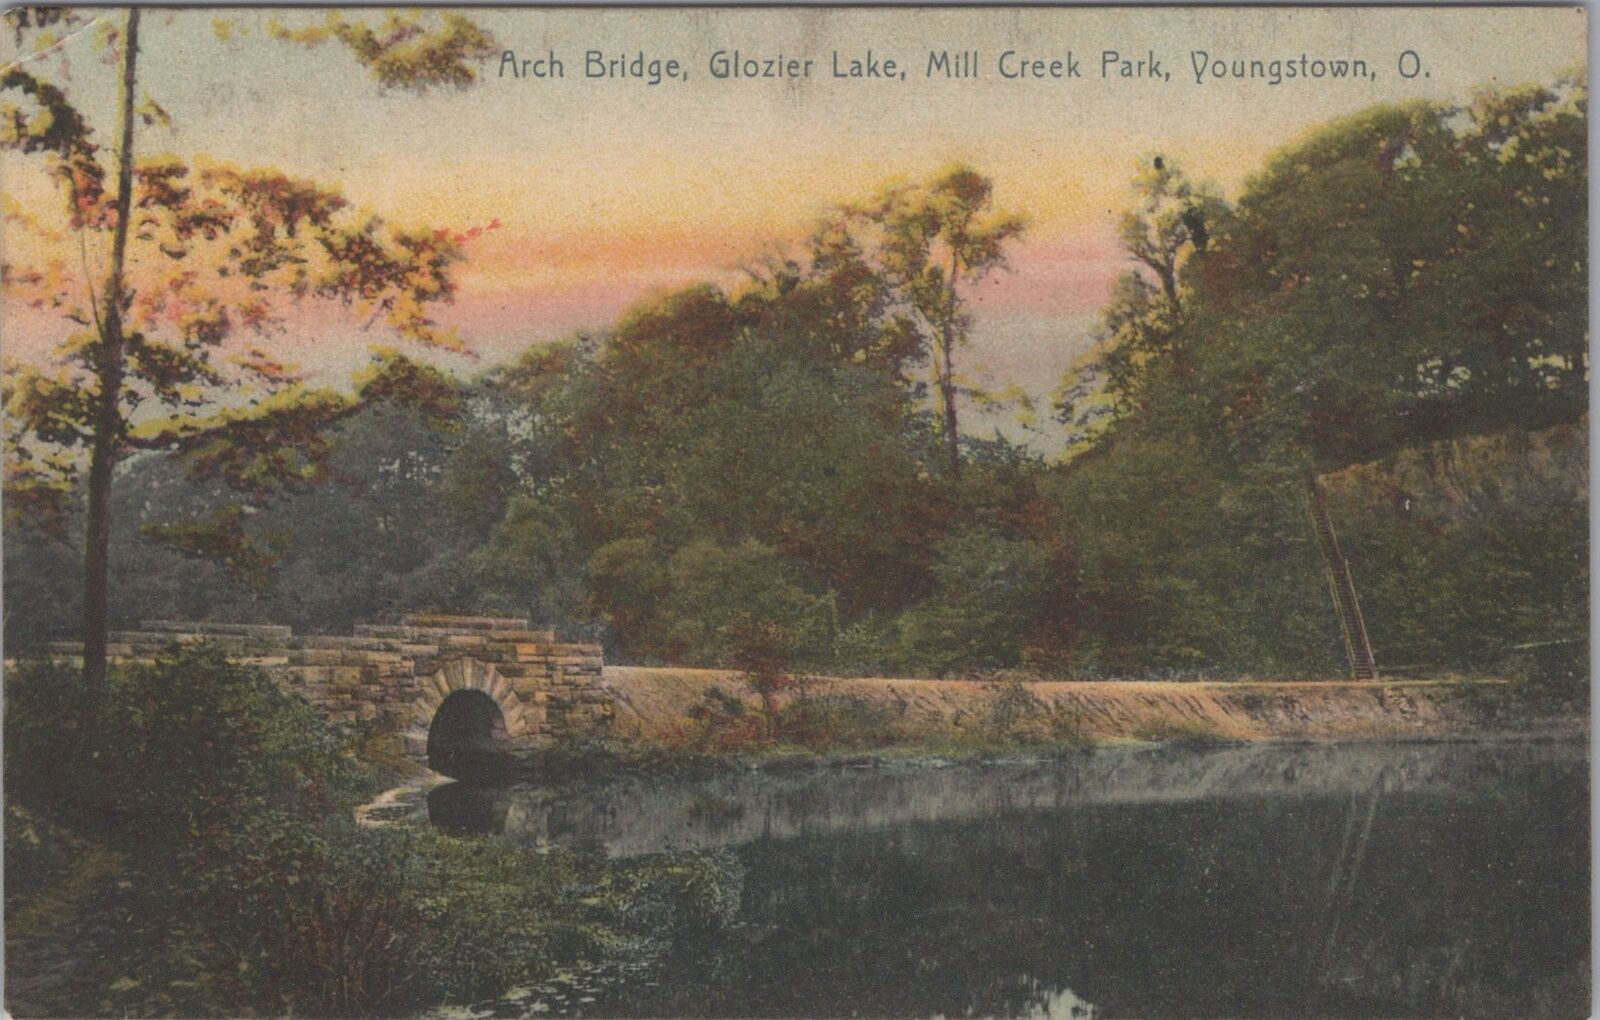 Arch Bridge, Glozier Lake, Mill Creek Park, Youngstown, Ohio 1910 Postcard